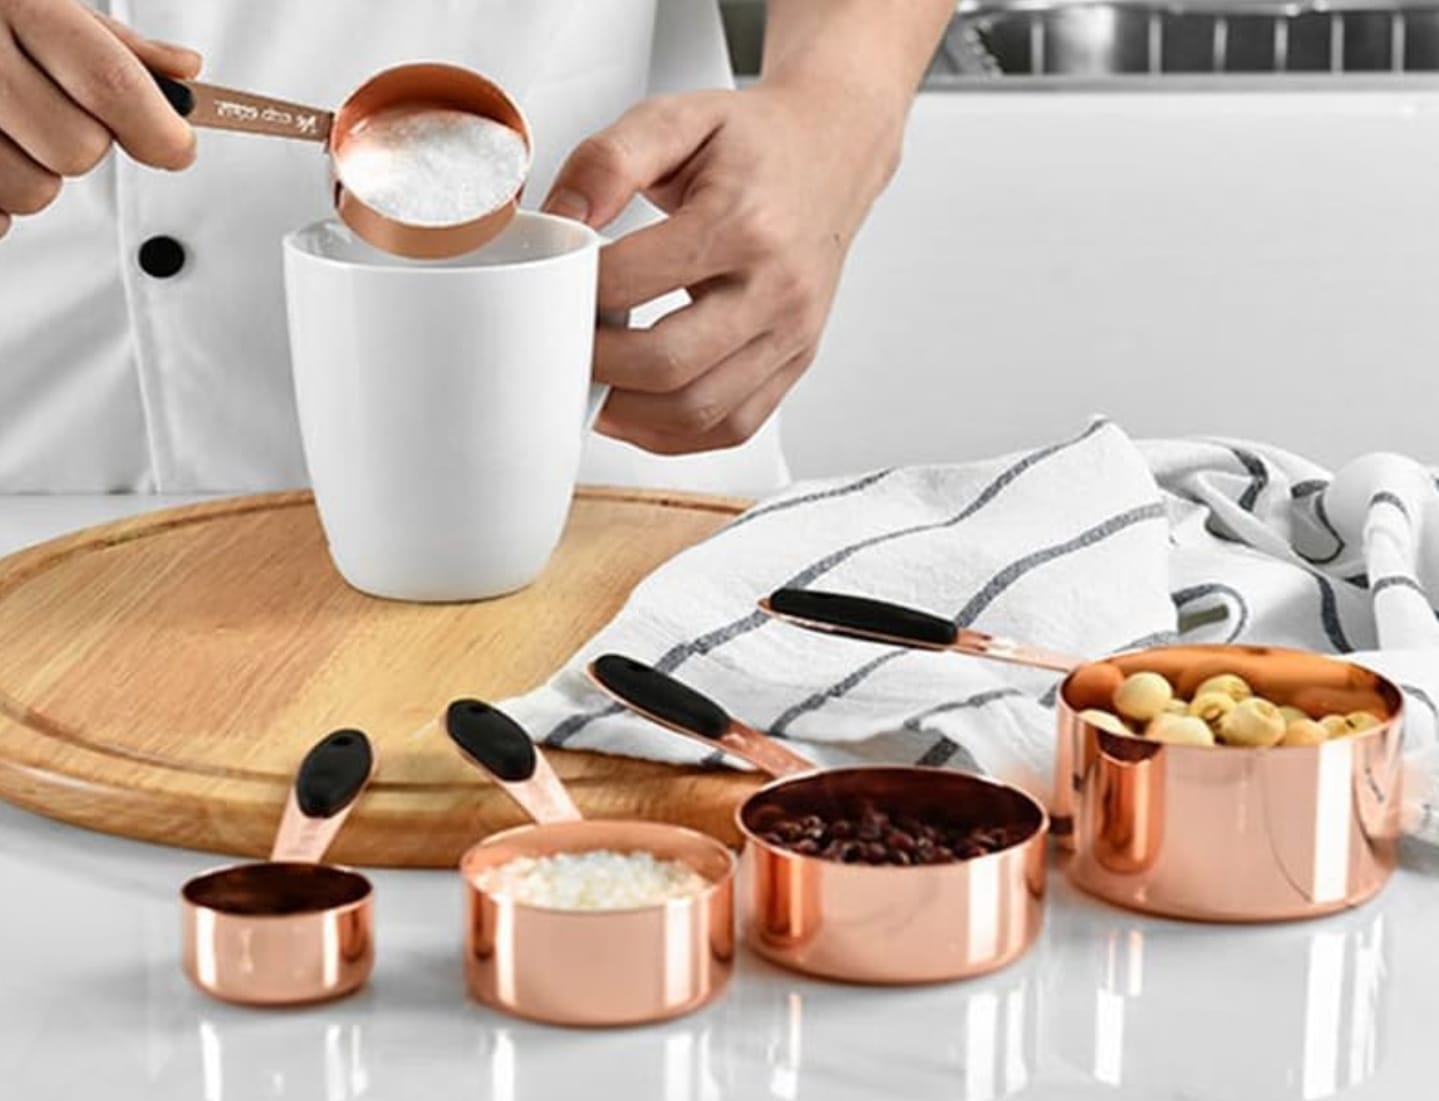 Cookware Pan & Spoon Set | Kitchen Utensils | Serving Spoons (Set of 10)